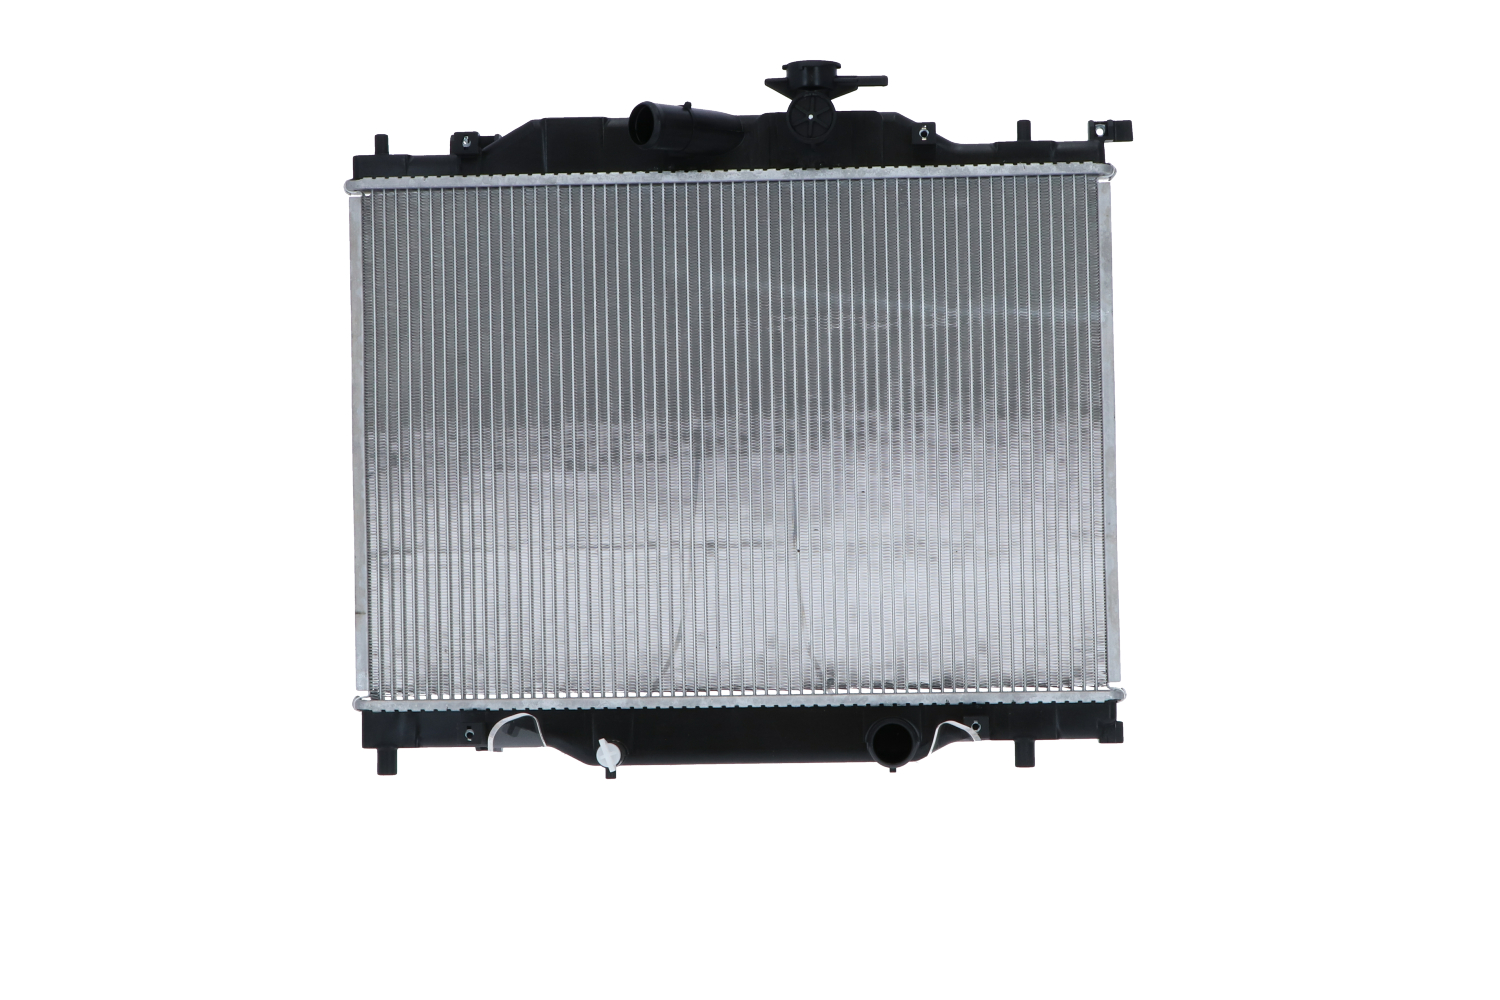 NRF 59249 Engine radiator 540 x 375 x 16 mm, Brazed cooling fins